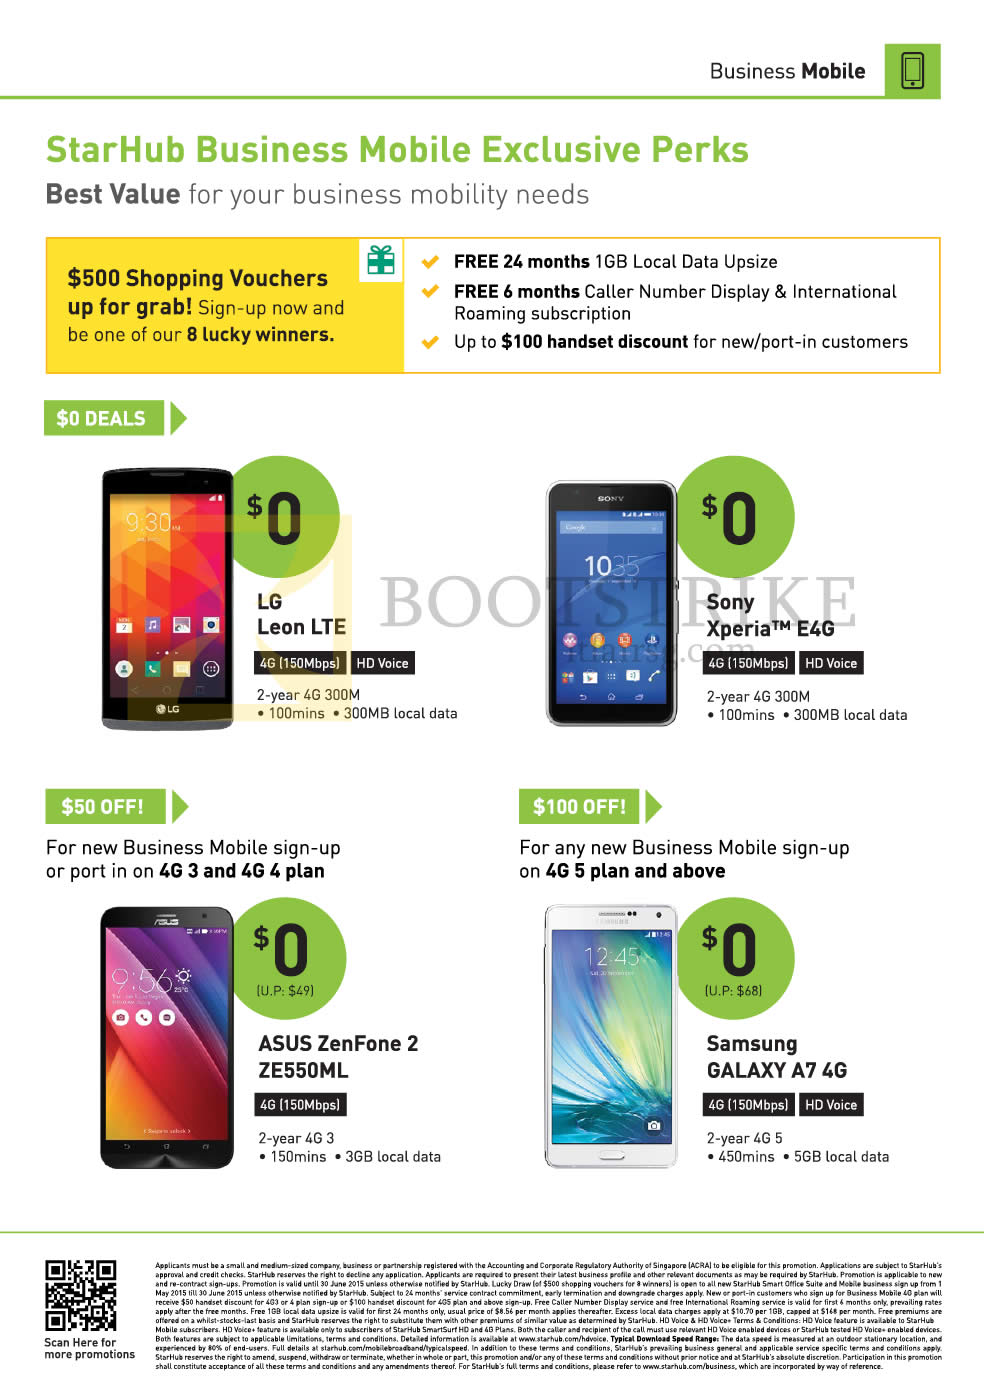 PC SHOW 2015 price list image brochure of Starhub Business Mobile LG Leon LTE, Sony Xperia E40, ASUS ZenFone 2 ZE550ML, Samsung Galaxy A7